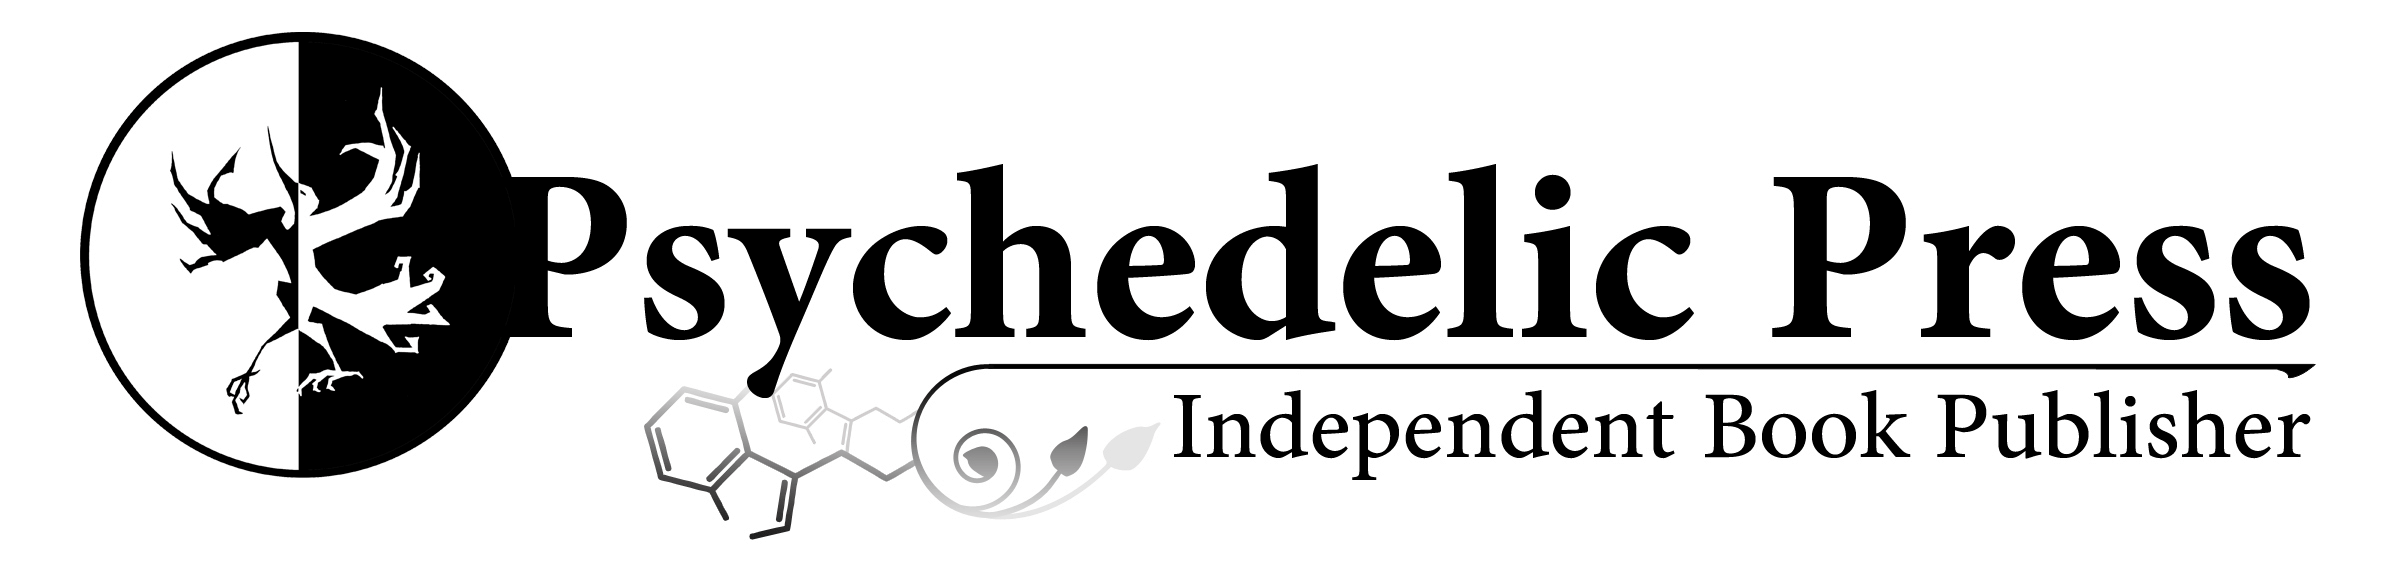 Psychedelic Press_logo